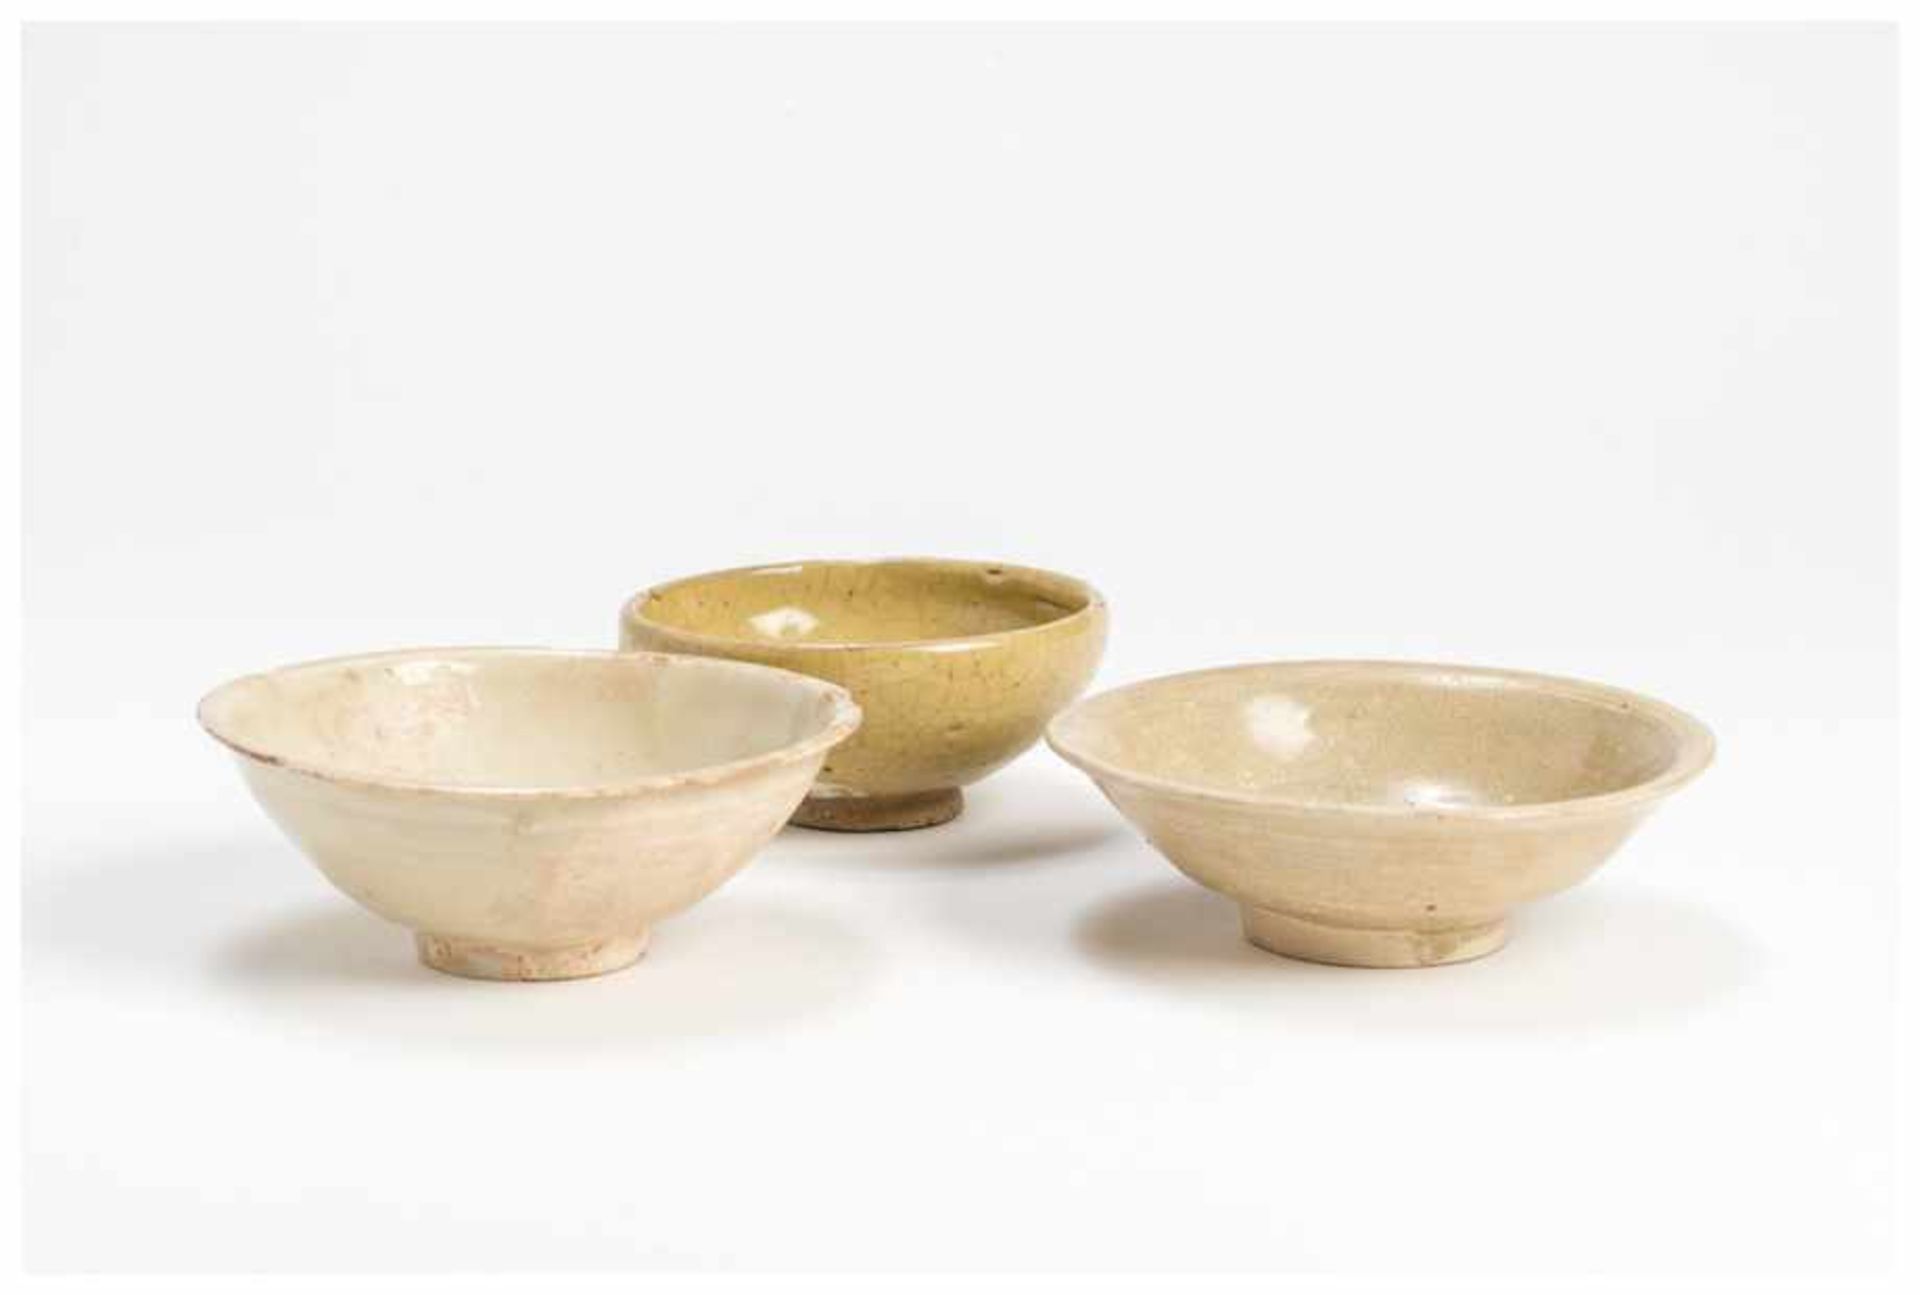 THREE SMALL CHINESE GLAZED CERAMIC BOWLS Glazed ceramic. China, Song to Ming dynastyThe deeper